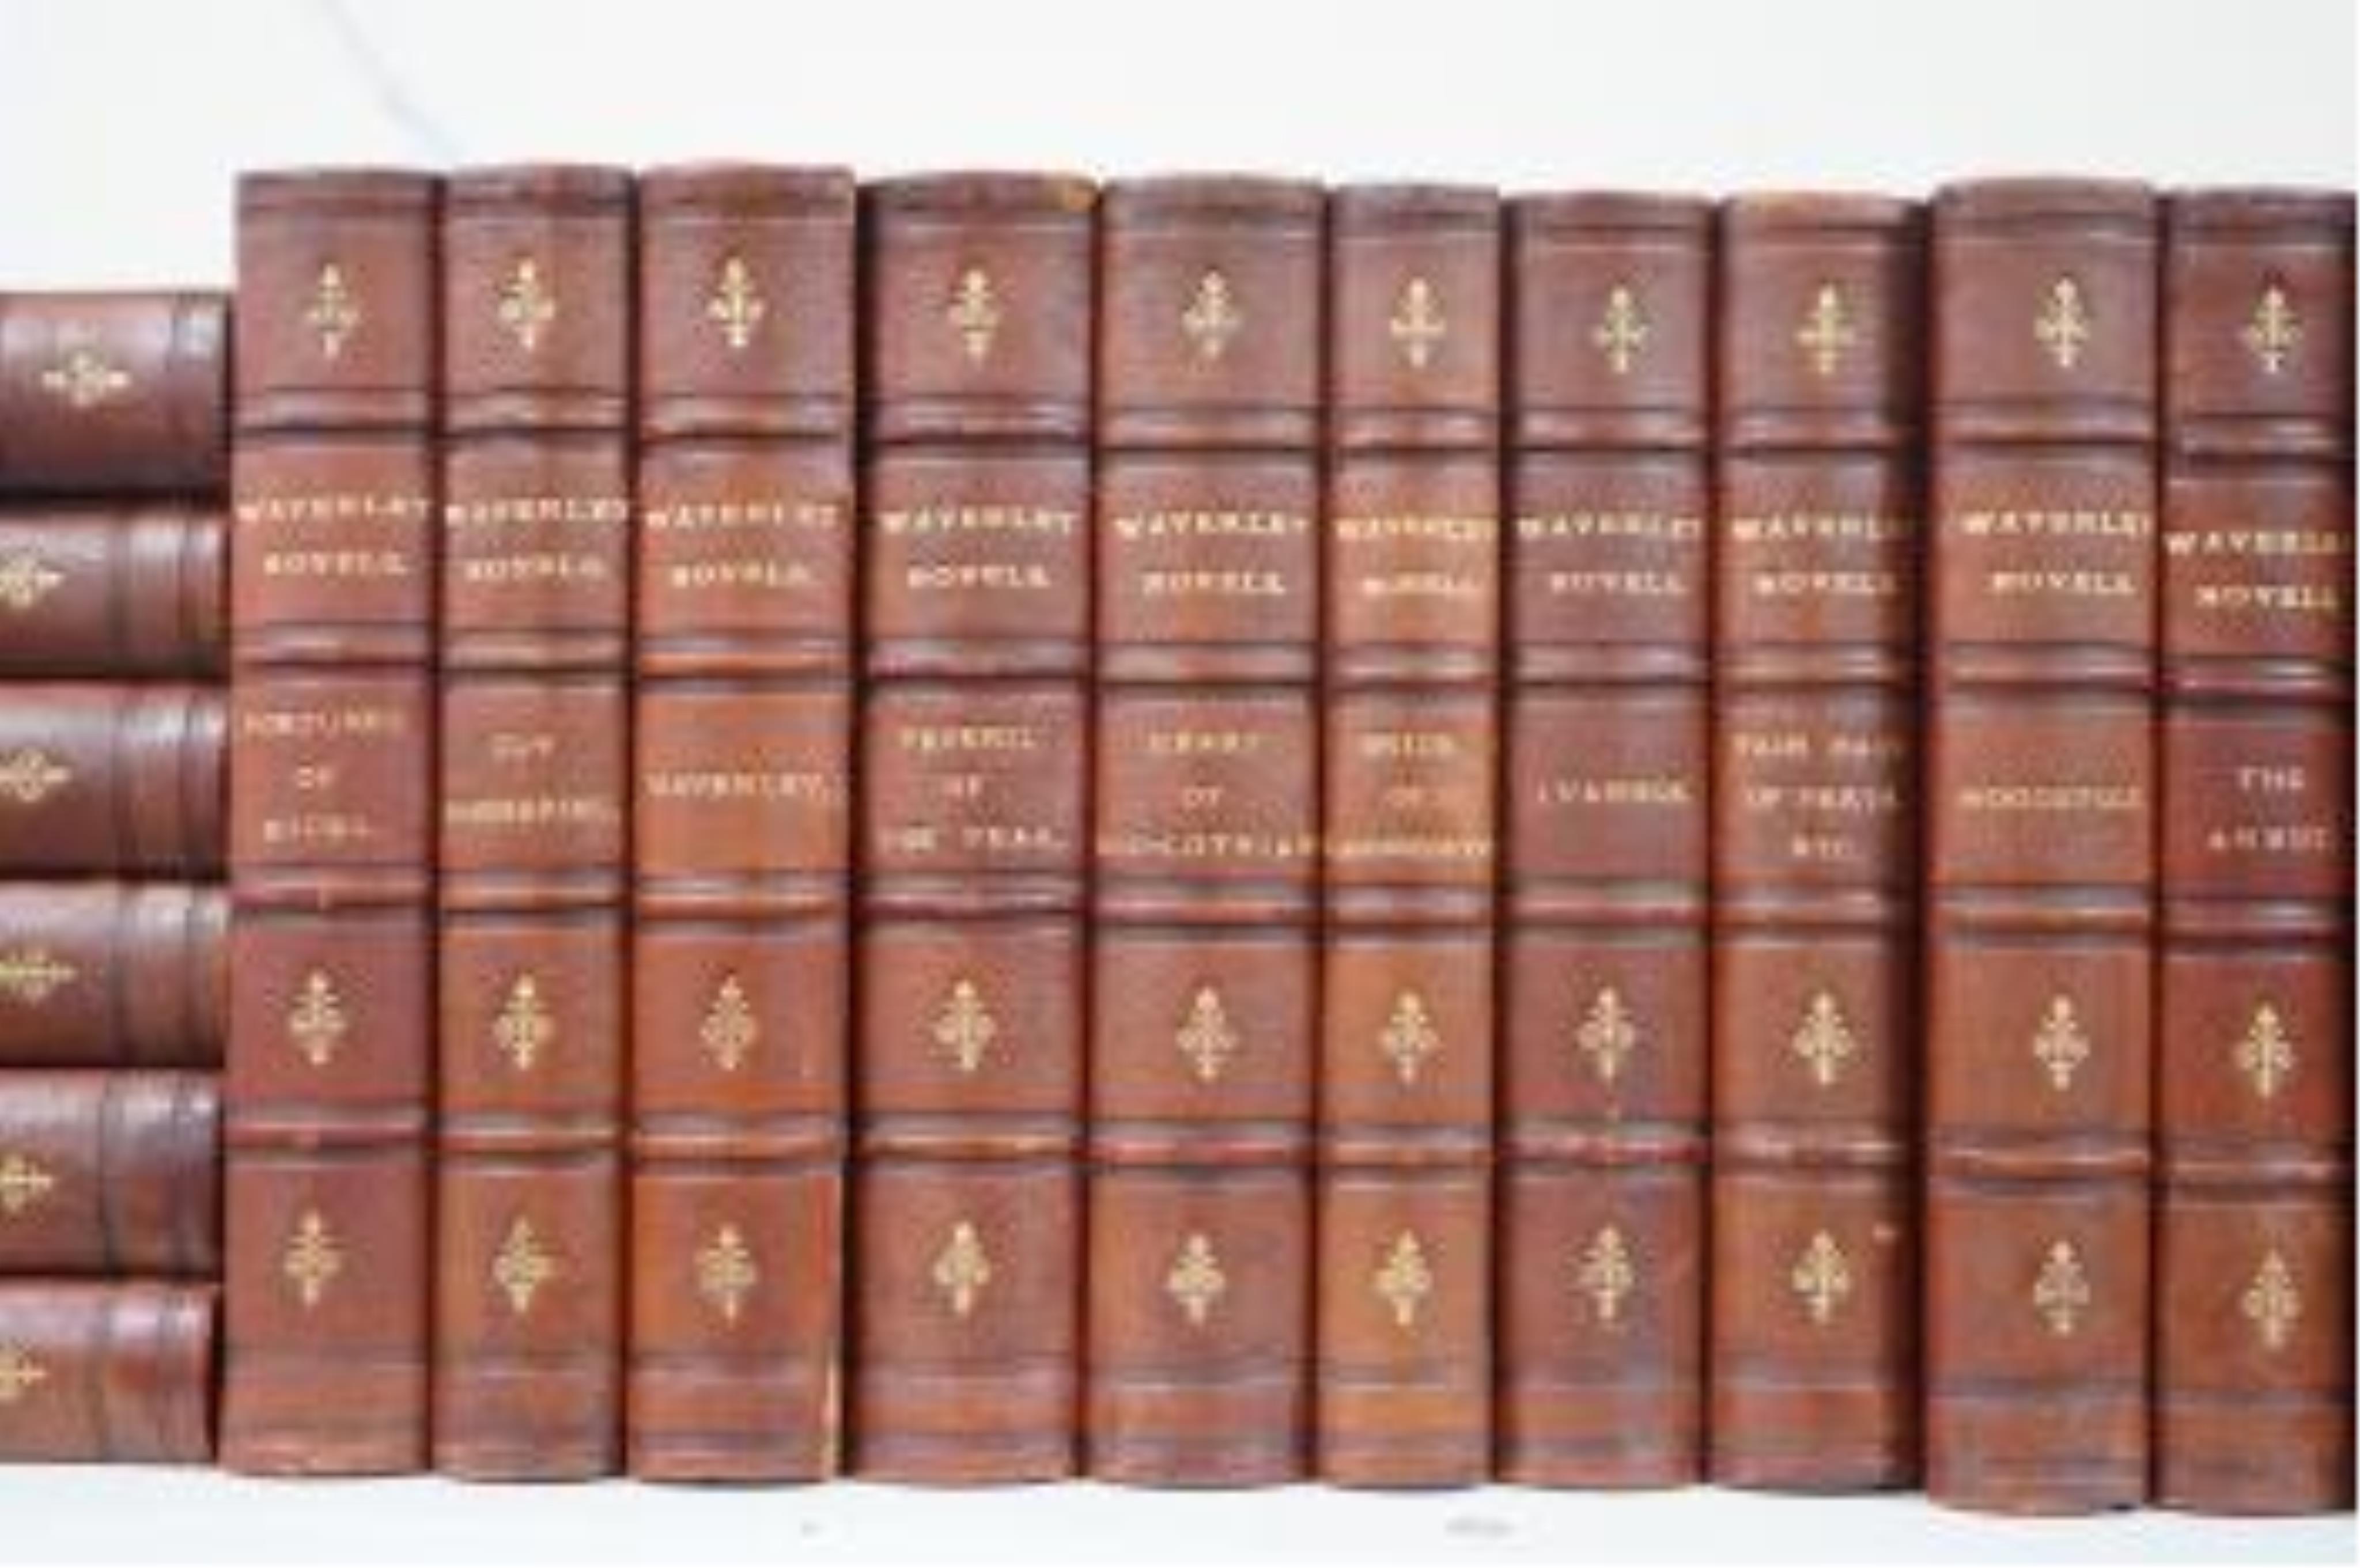 Johnson, Samuel - English Poets, Works, vols 5 - 21 only, half morocco, London 1810 and Scott, Sir Walter - Waverley Novels, Centenary Edition, 8vo. half morocco, 25 vols, A & C Black, Edinburgh 1871